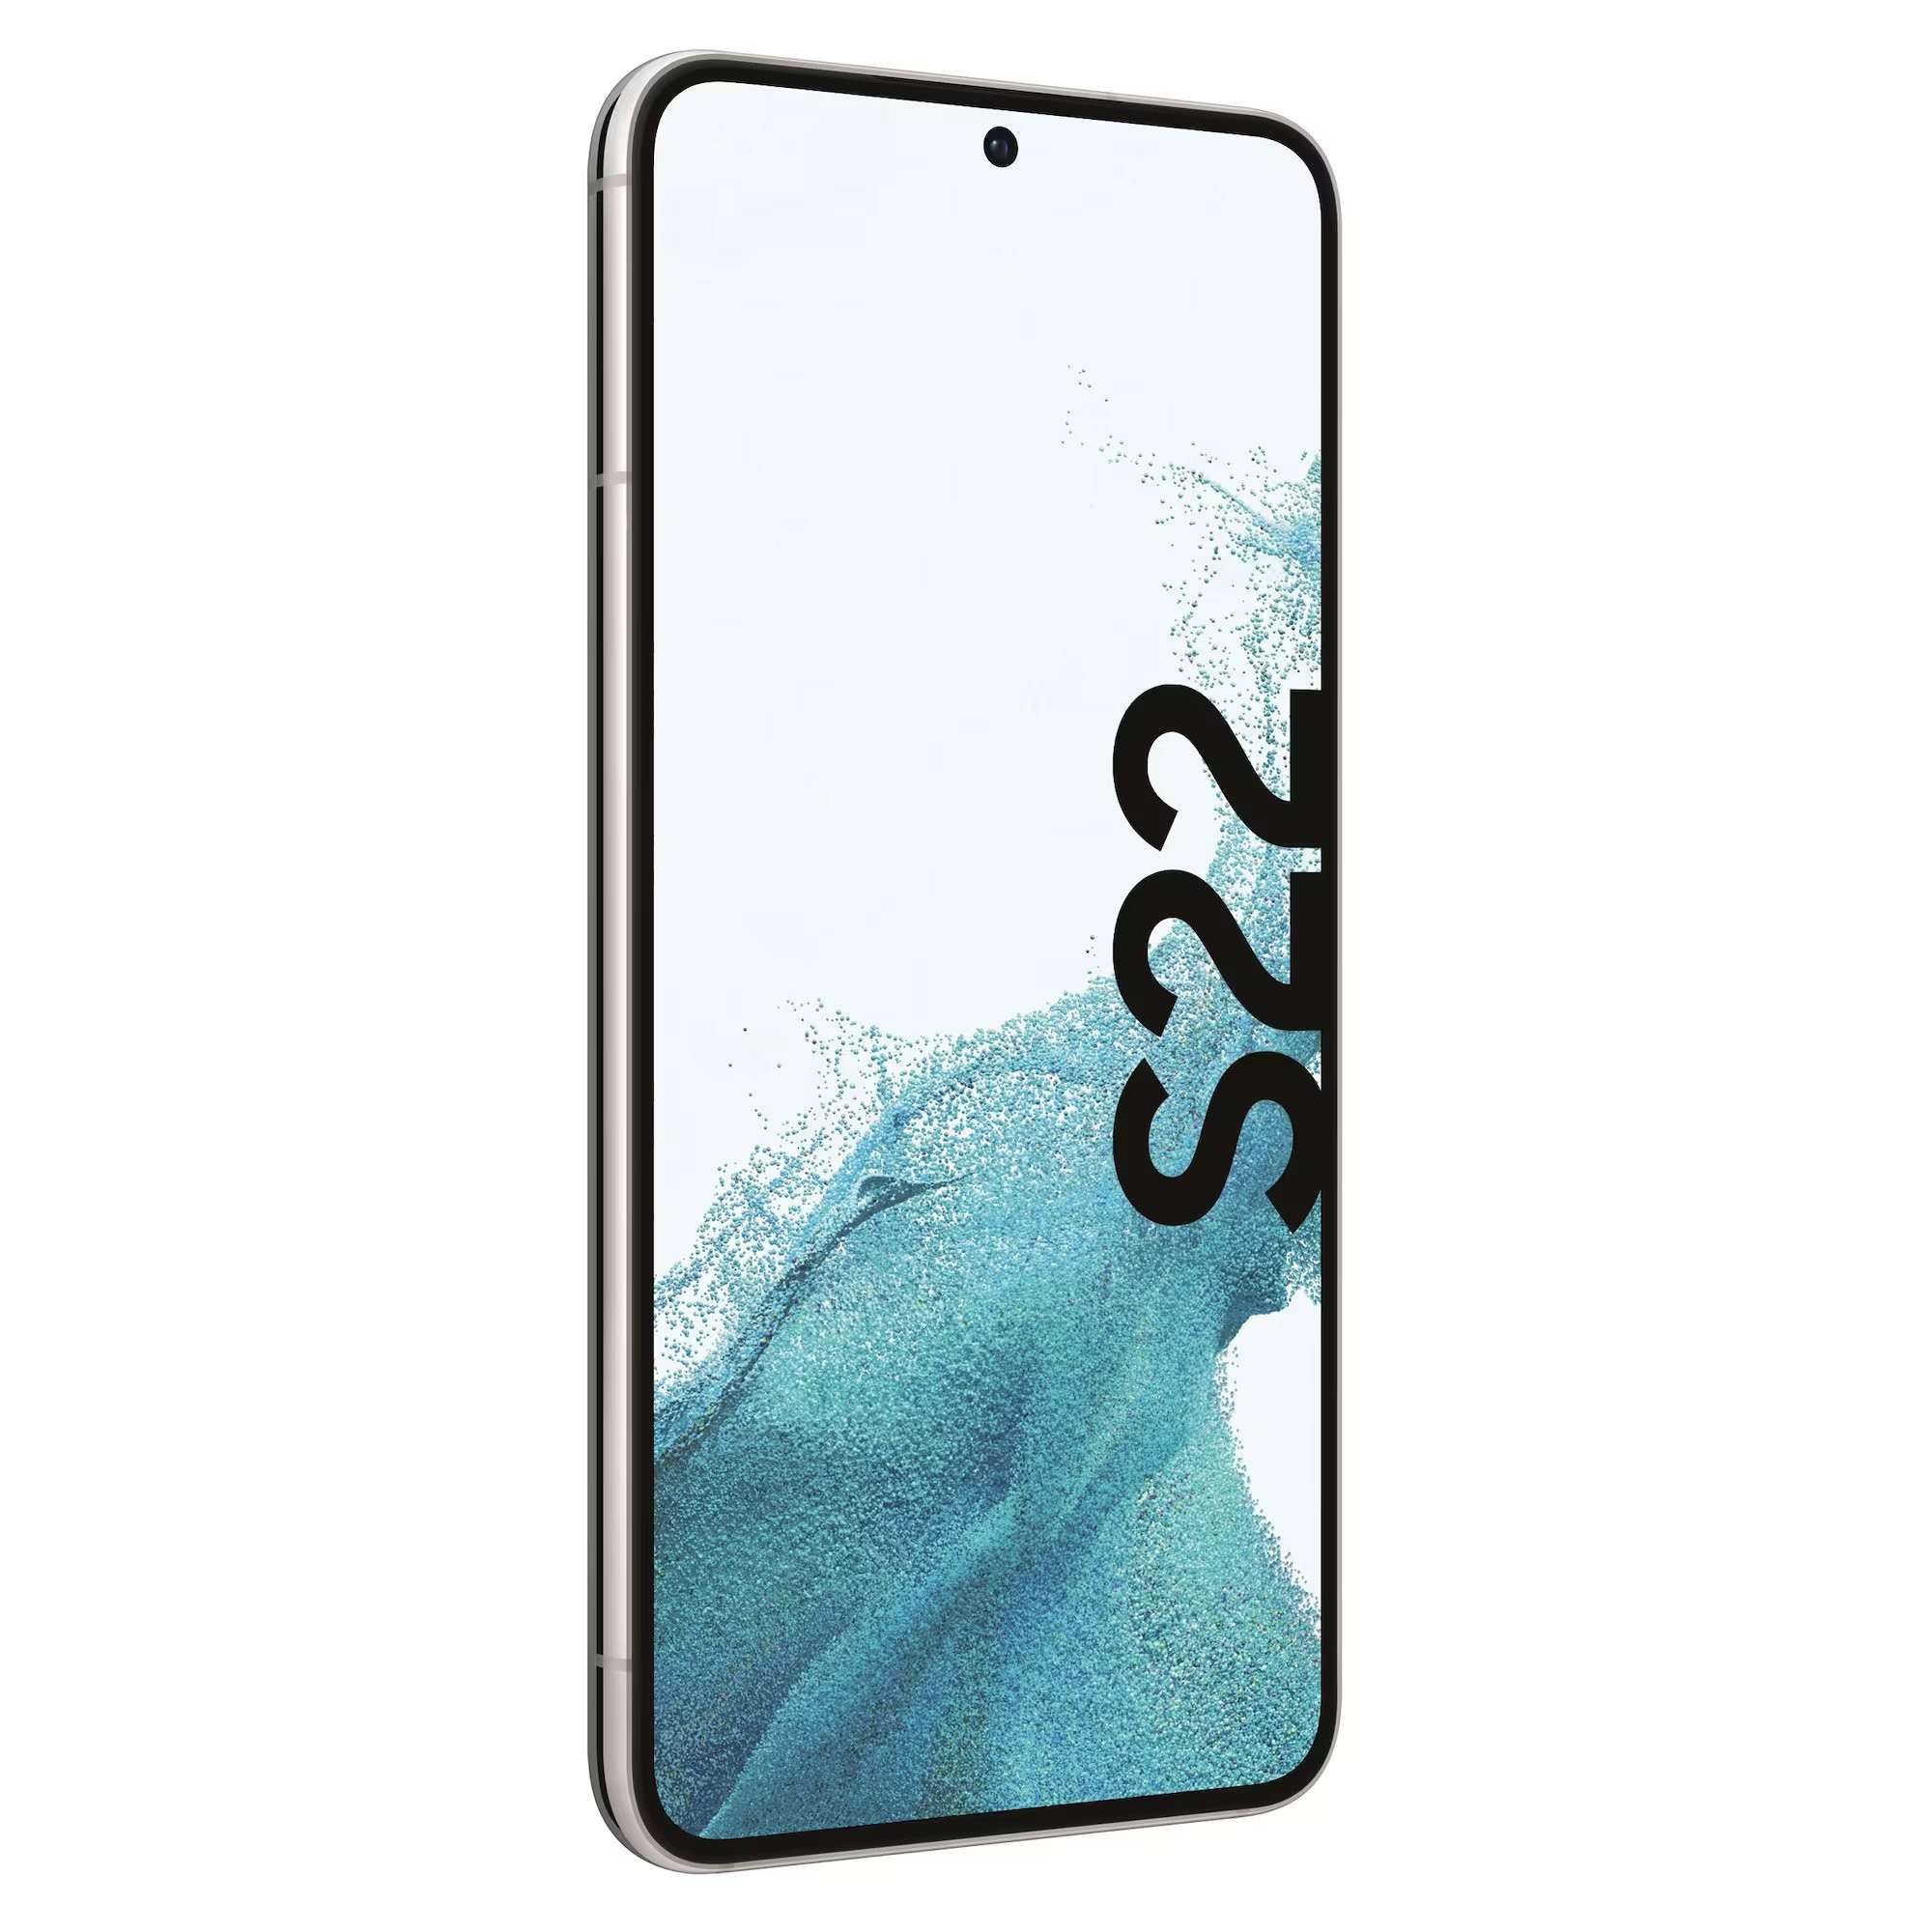 Samsung GALAXY S22 5G Smartphone 128GB phantom white Android 12.0